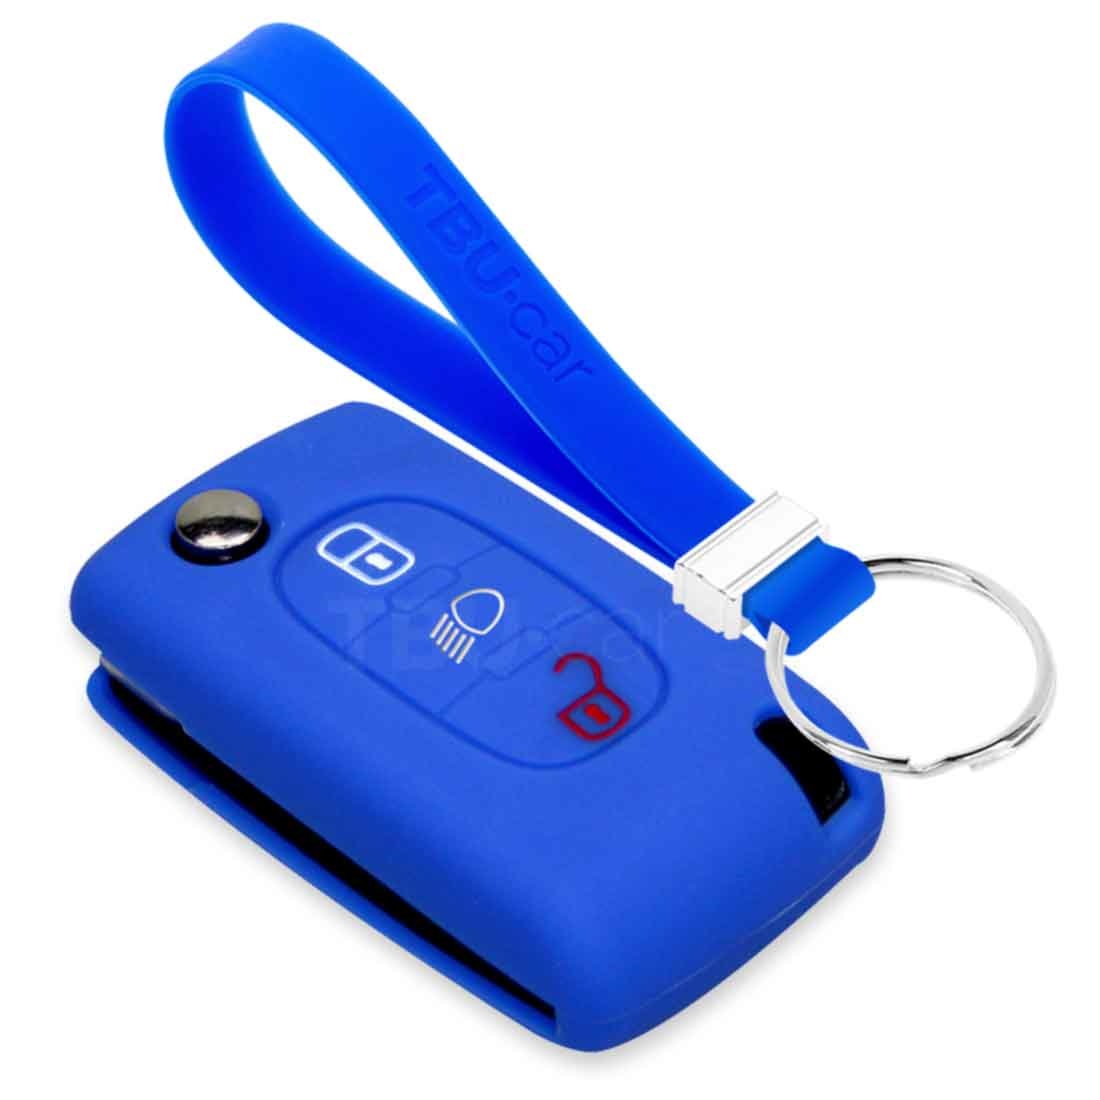 TBU car TBU car Funda Carcasa llave compatible con Peugeot - Funda de Silicona - Cover de Llave Coche - Azul